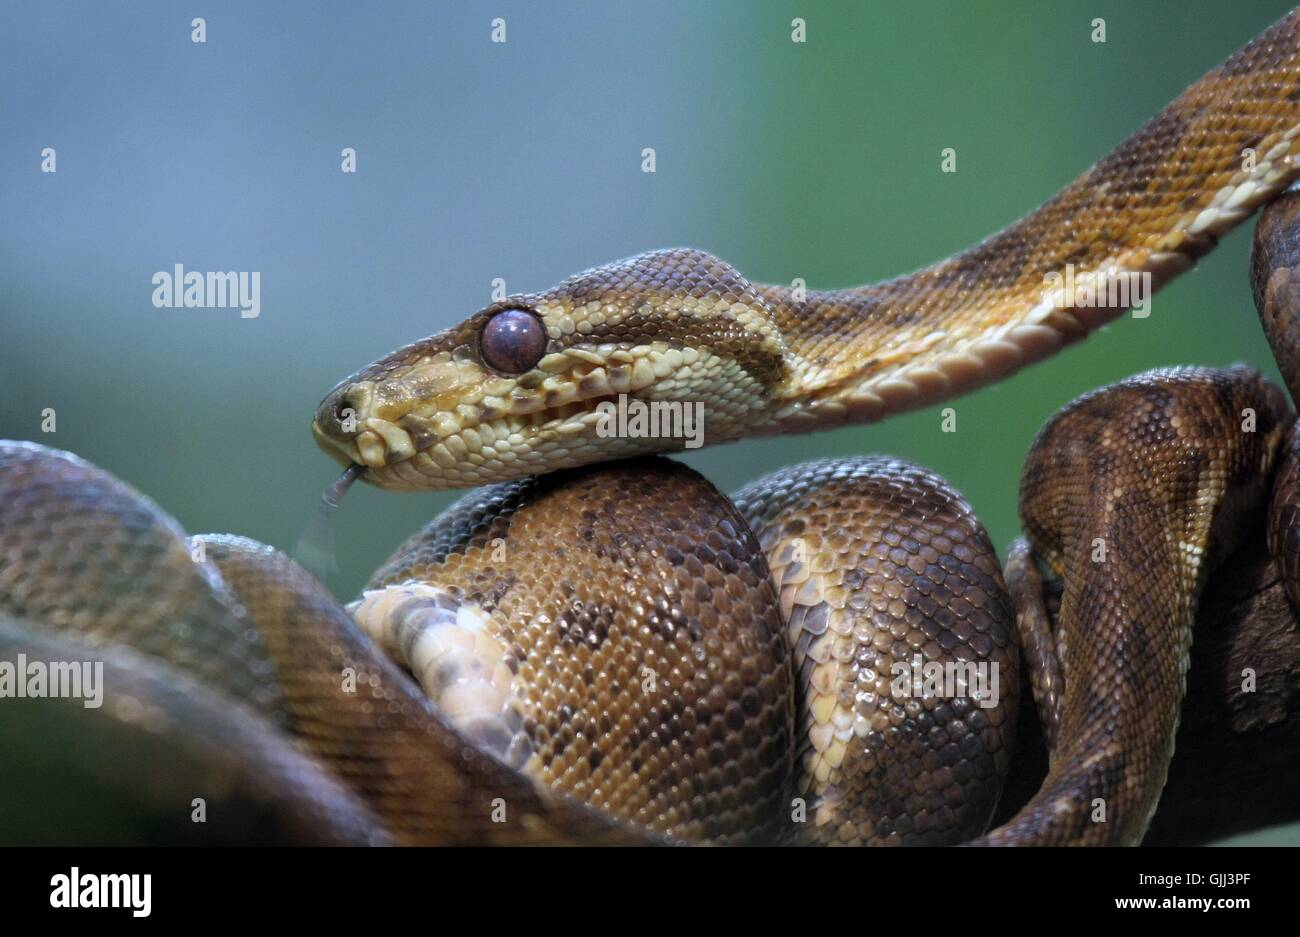 Schlangen Amazon grün Stockfotografie - Alamy